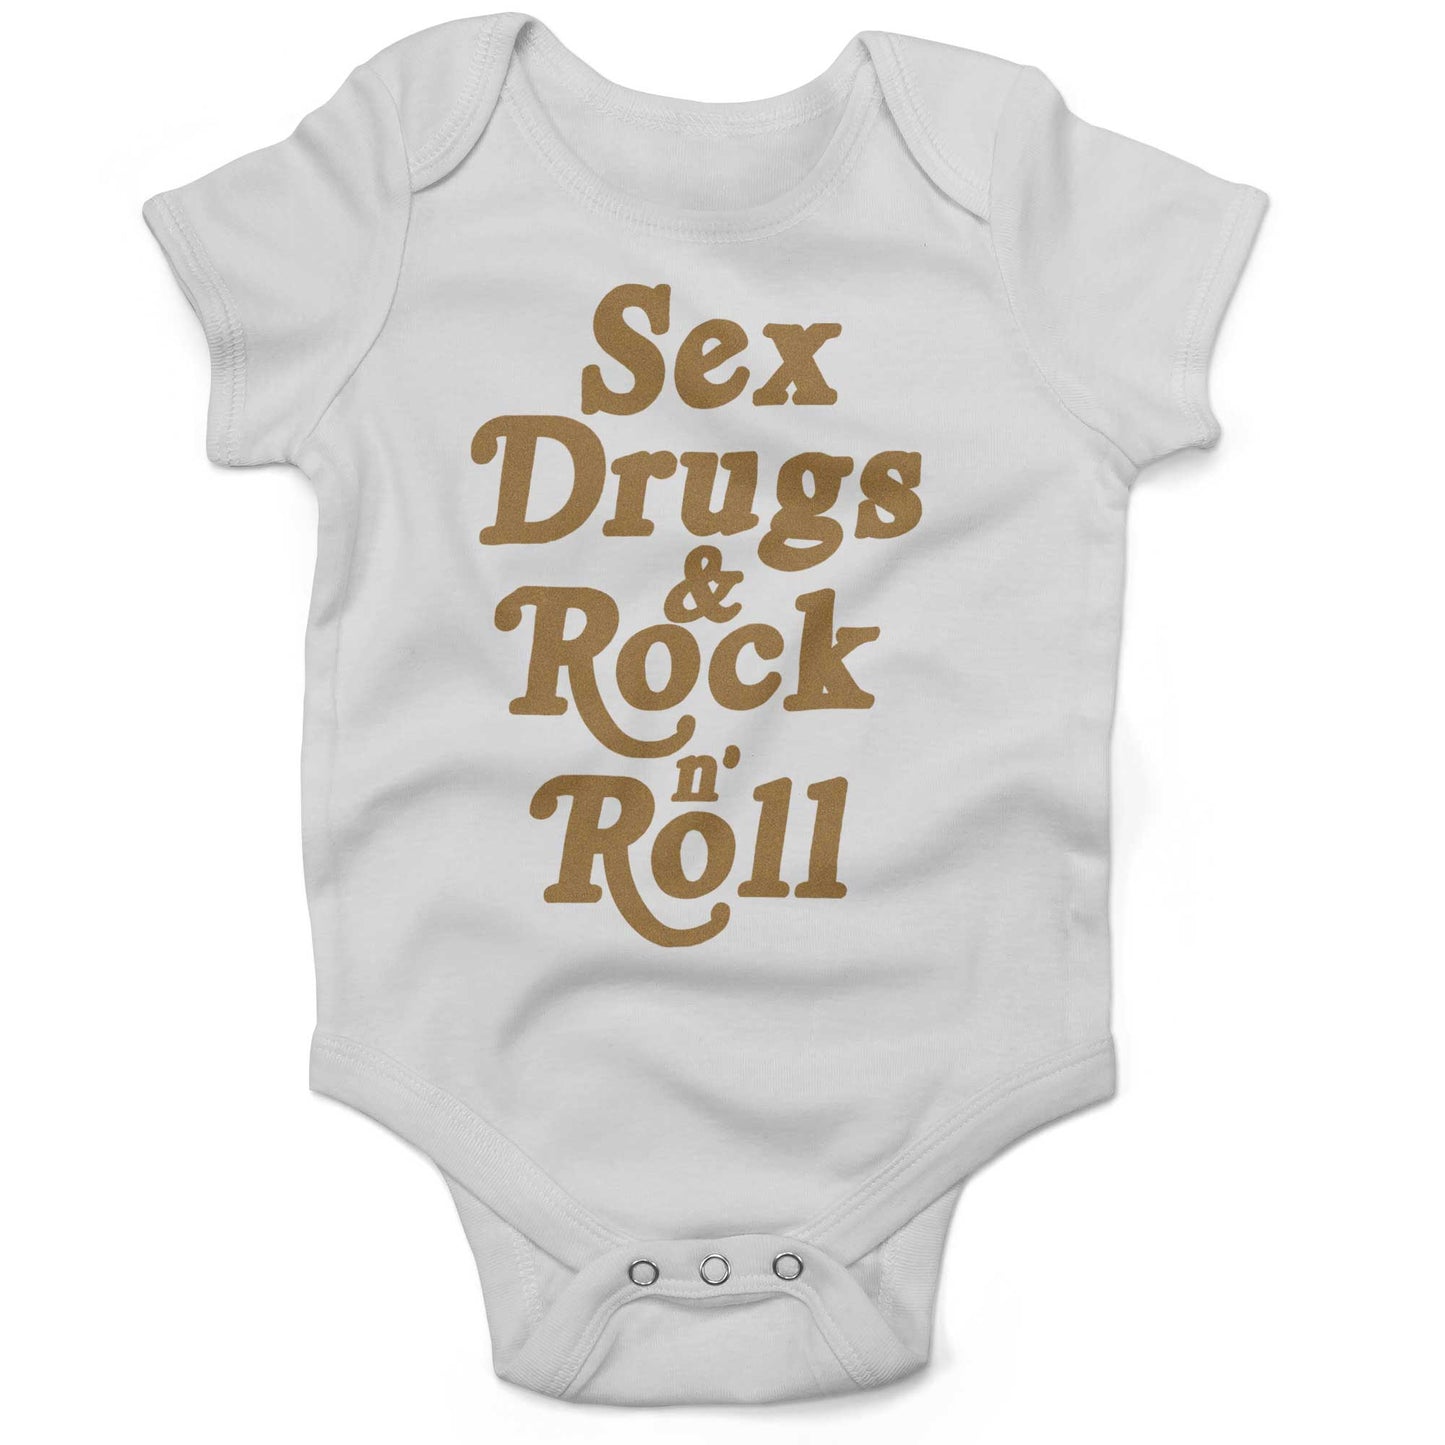 Sex, Drugs & Rock 'n Roll Infant Bodysuit or Raglan Baby Tee-White-3-6 months